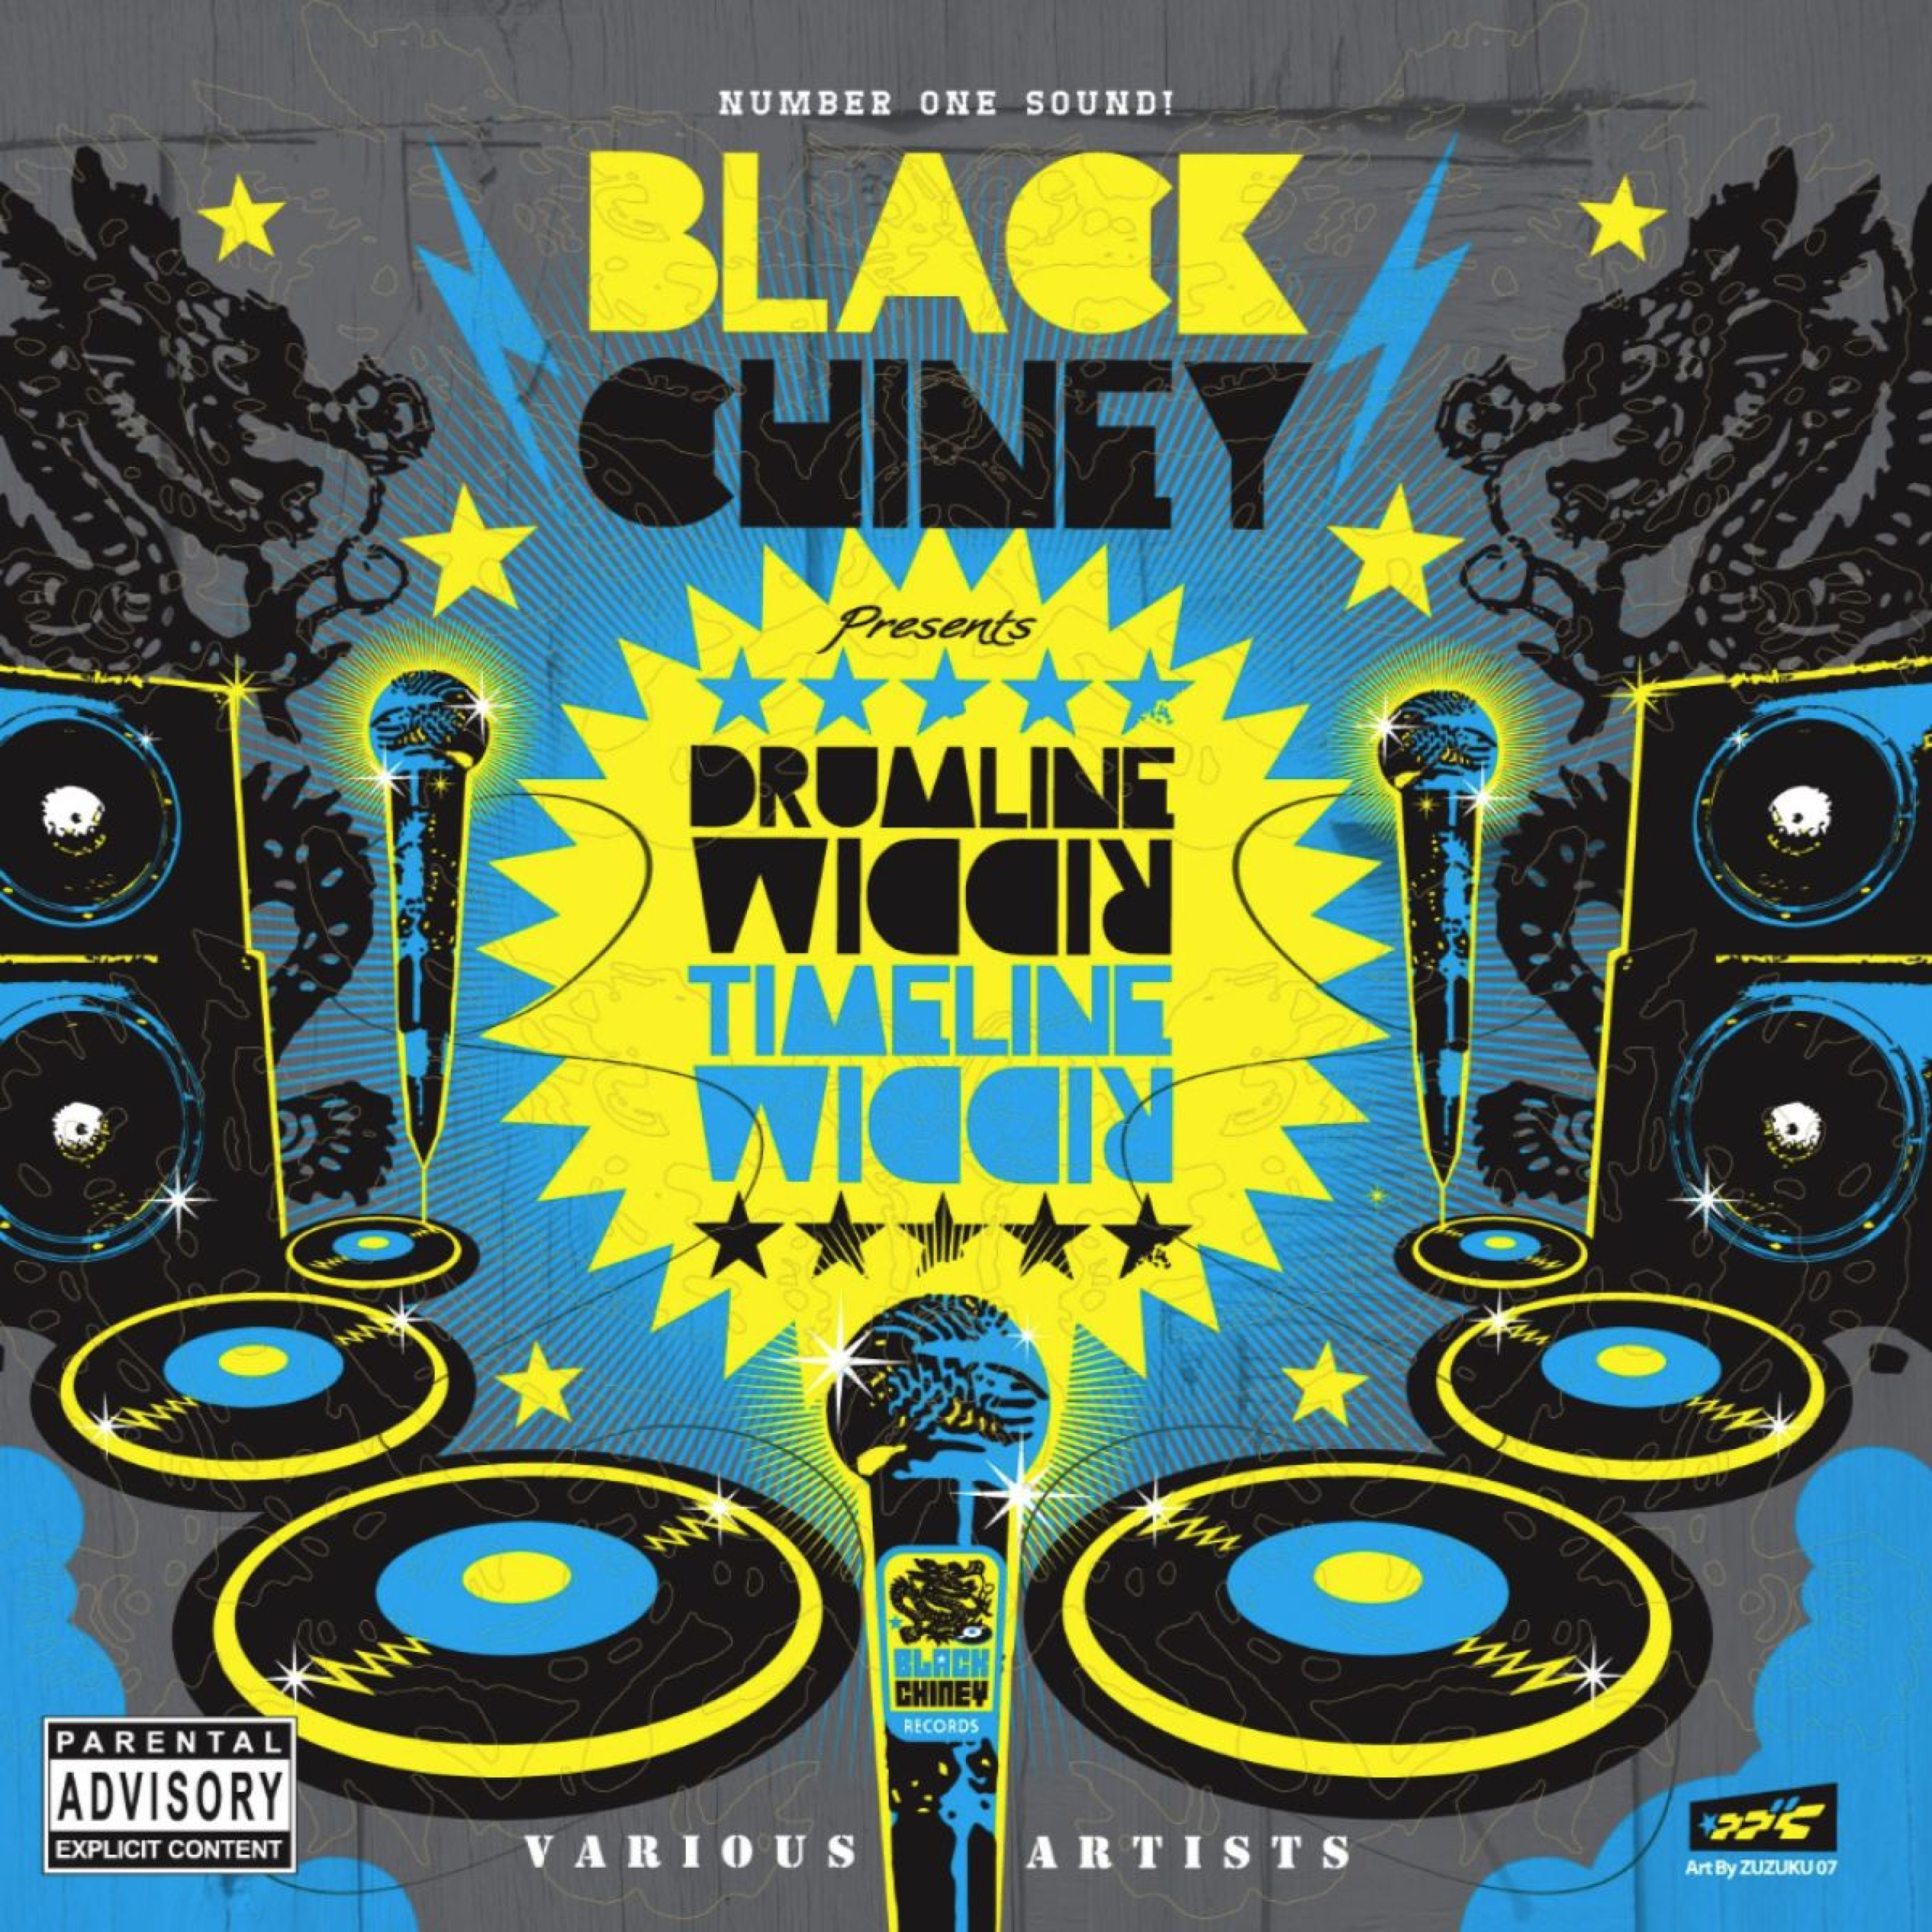 Black Chiney Presents: Drumline Riddim & Timeline Riddim